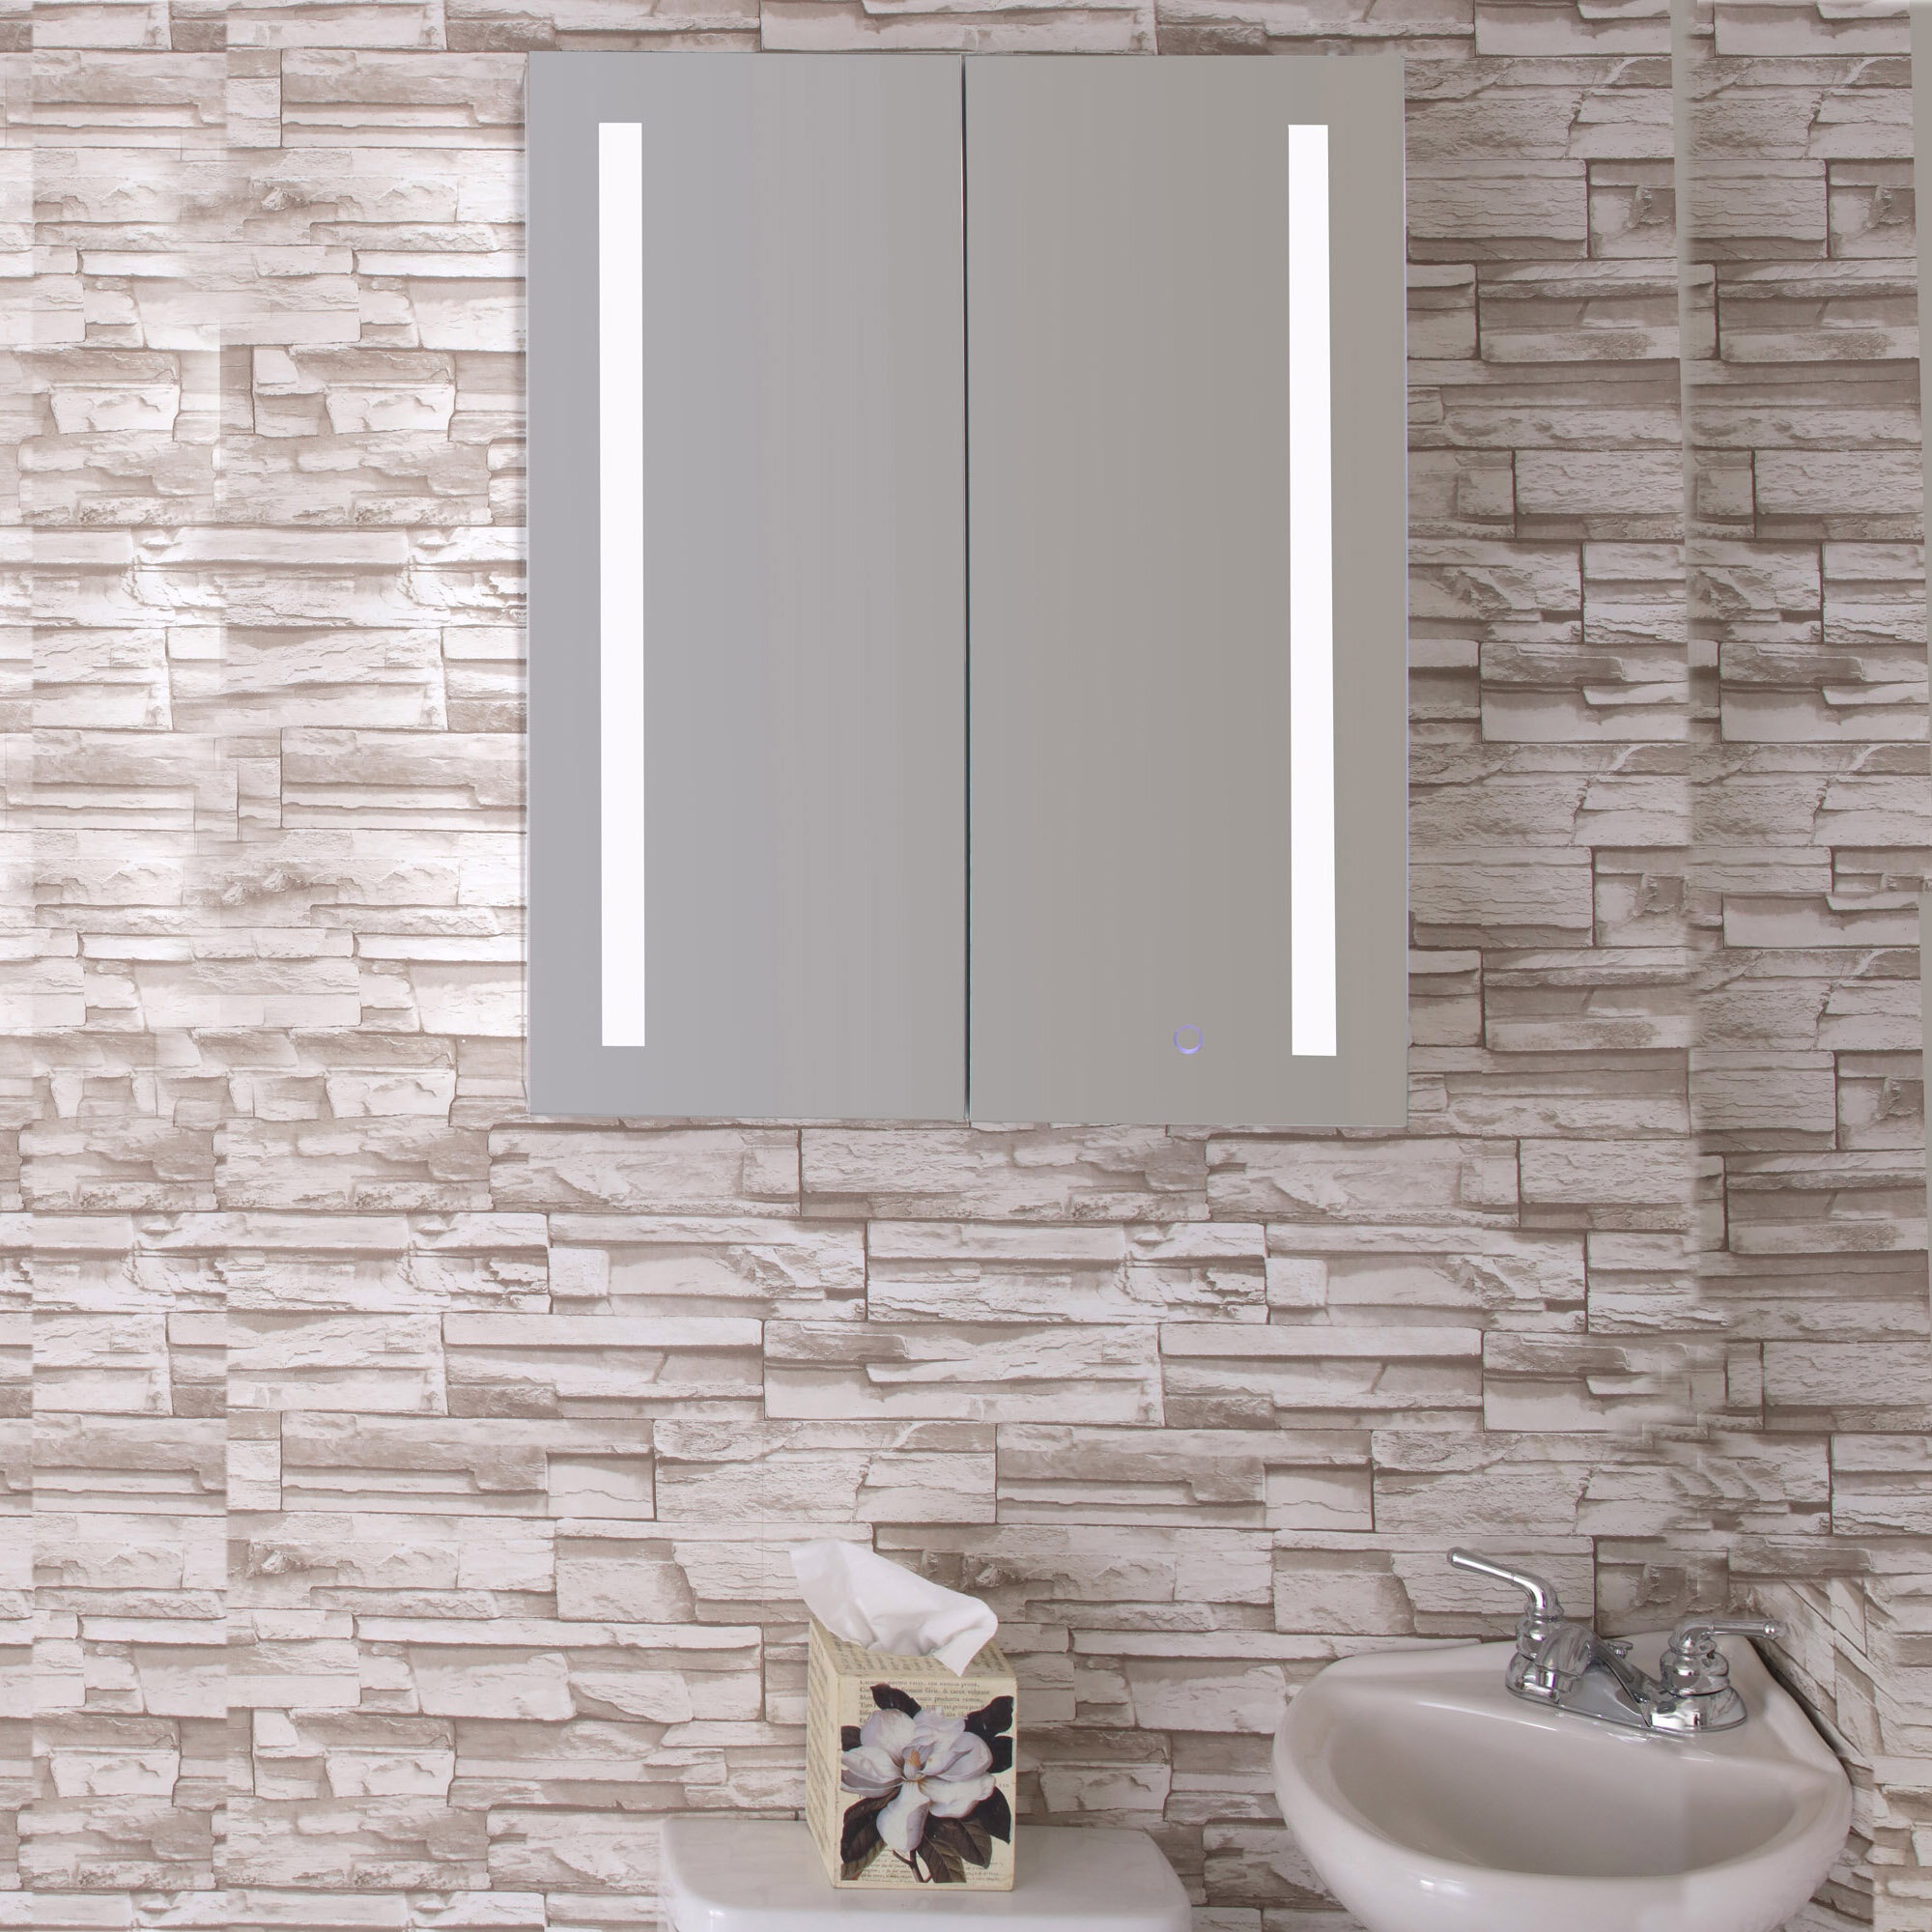 36 inch Wide Wall Mount Mirrored Bathroom Medicine Cabinet Triple Mirror Door, White